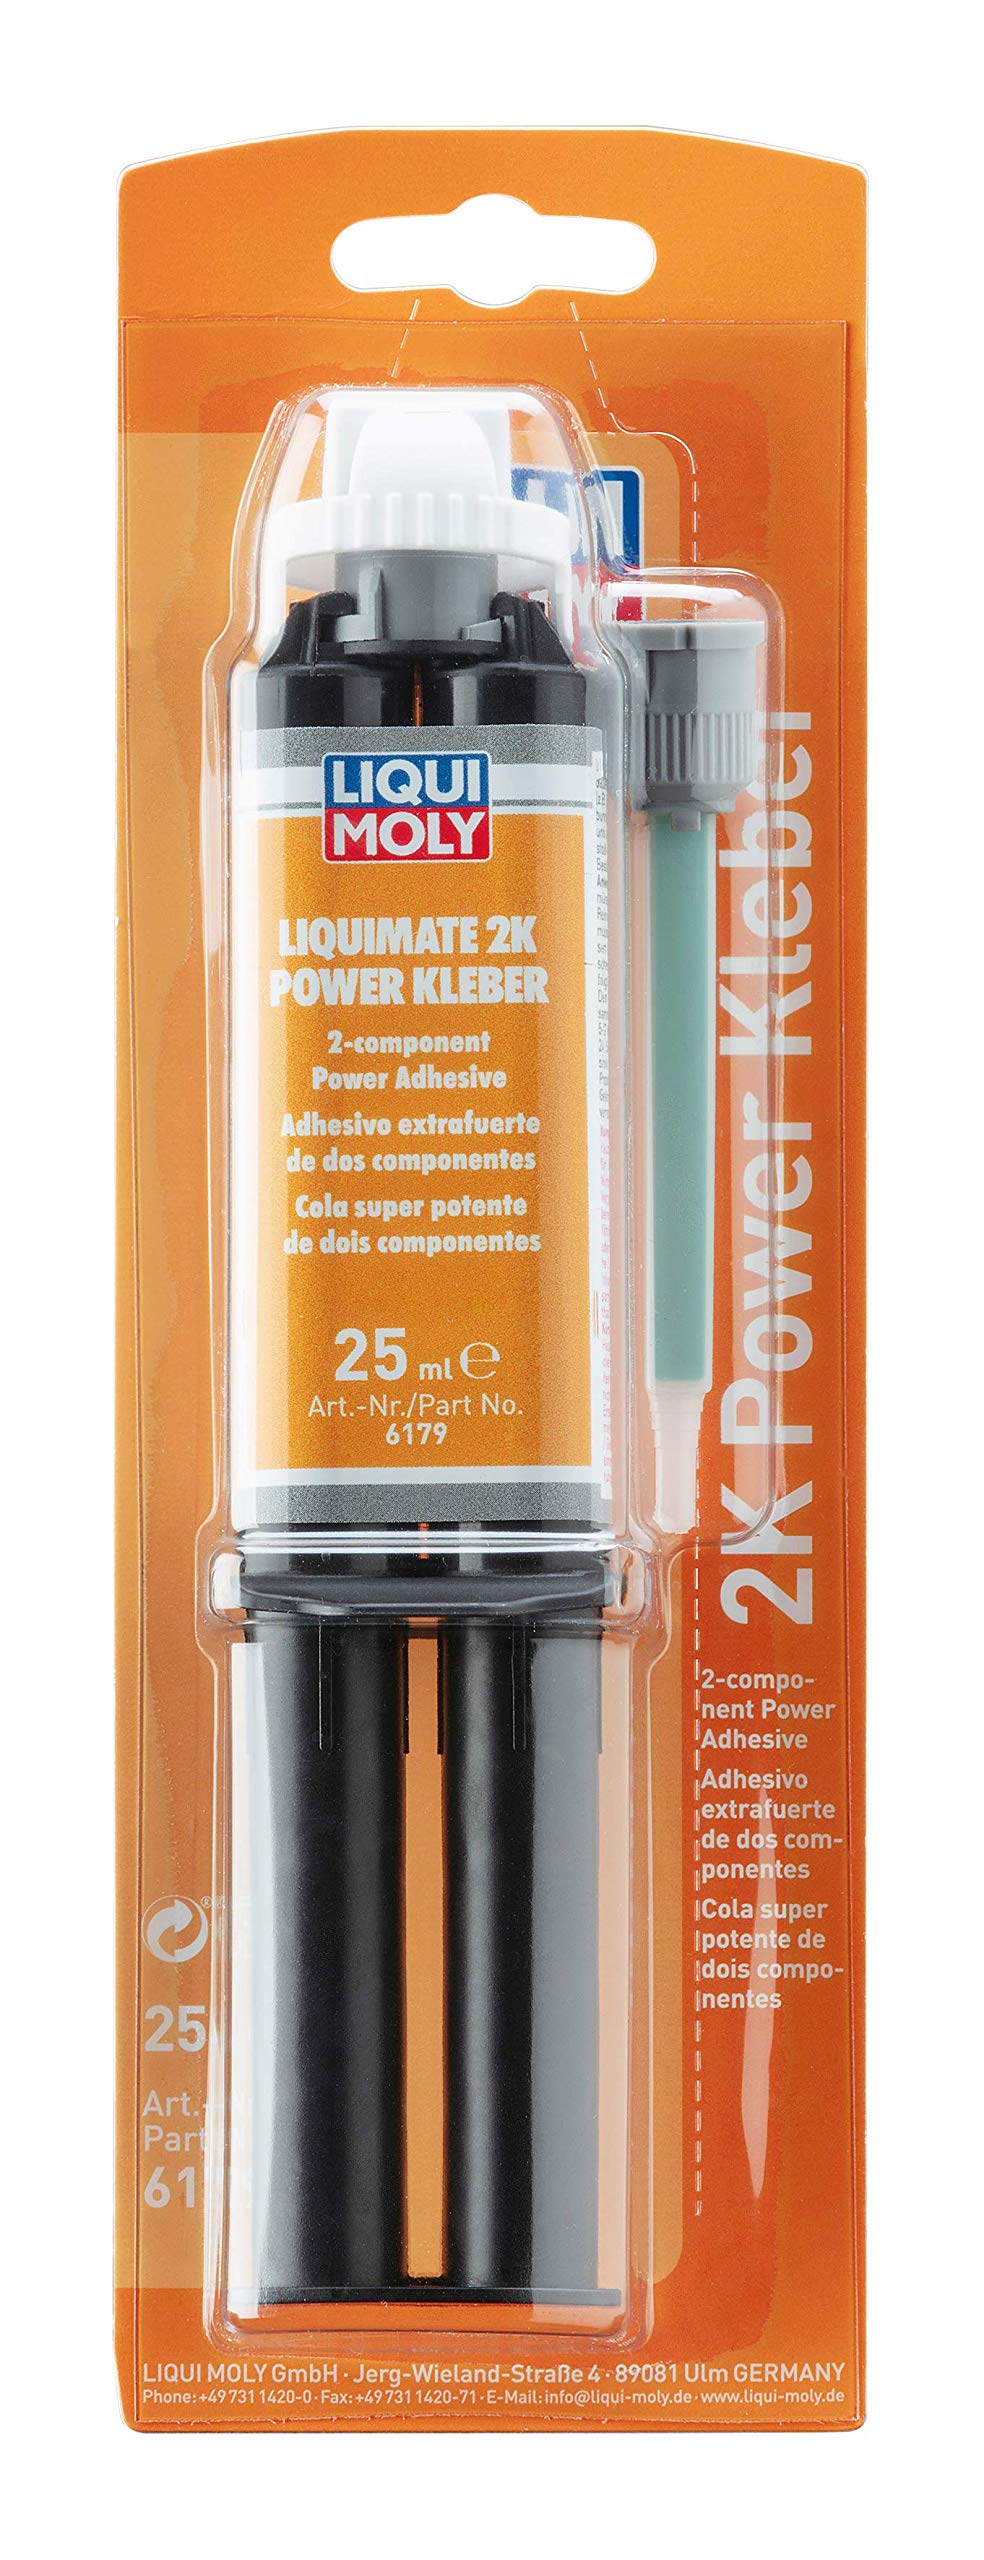 LIQUI MOLY Liquimate 2K Power Kleber | 25 ml | Klebstoff | Art.-Nr.: 6179 von Liqui Moly